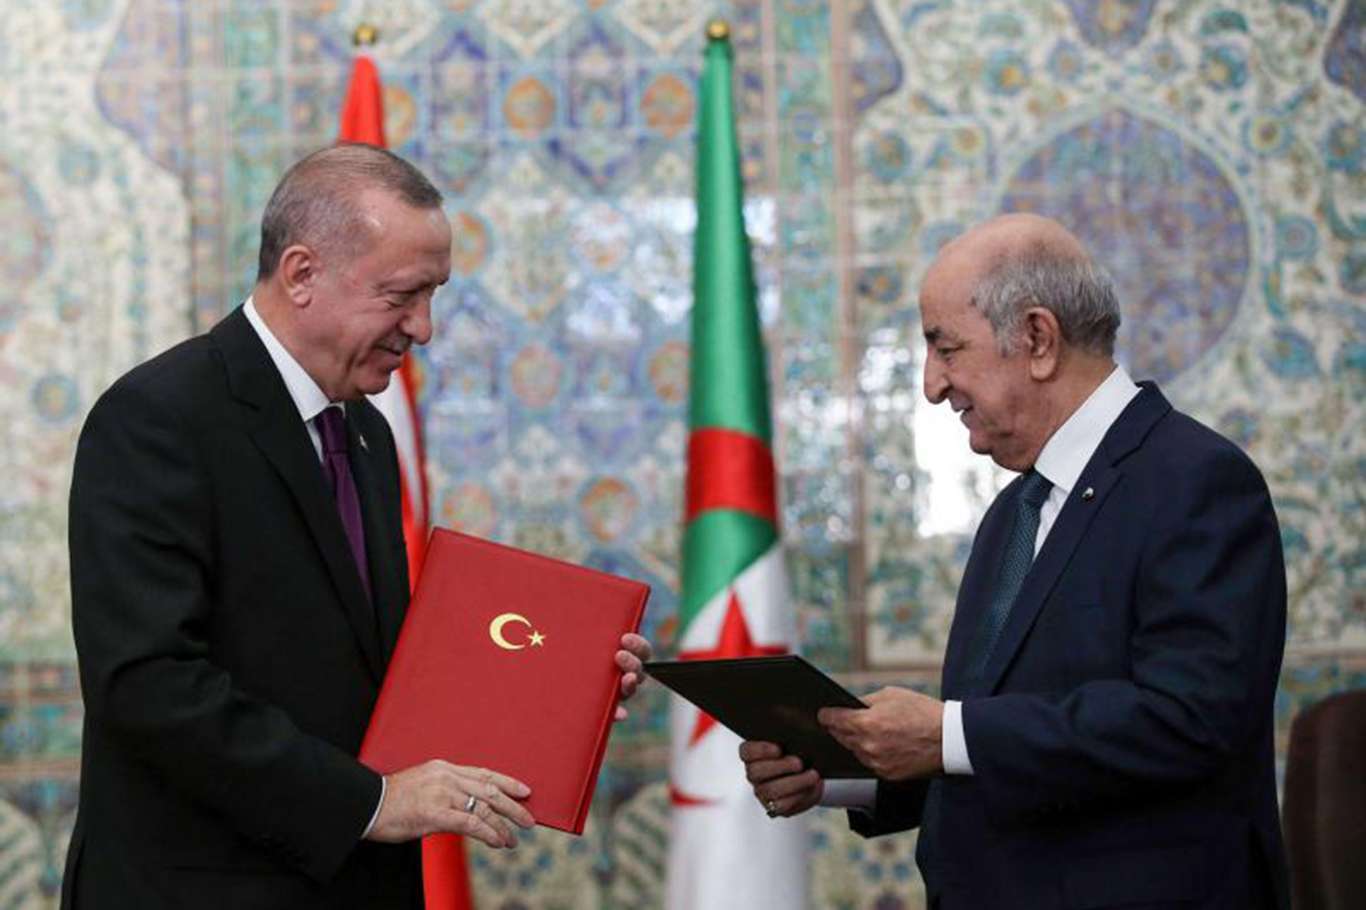 Algerian President arrives in Turkey for three-day visit